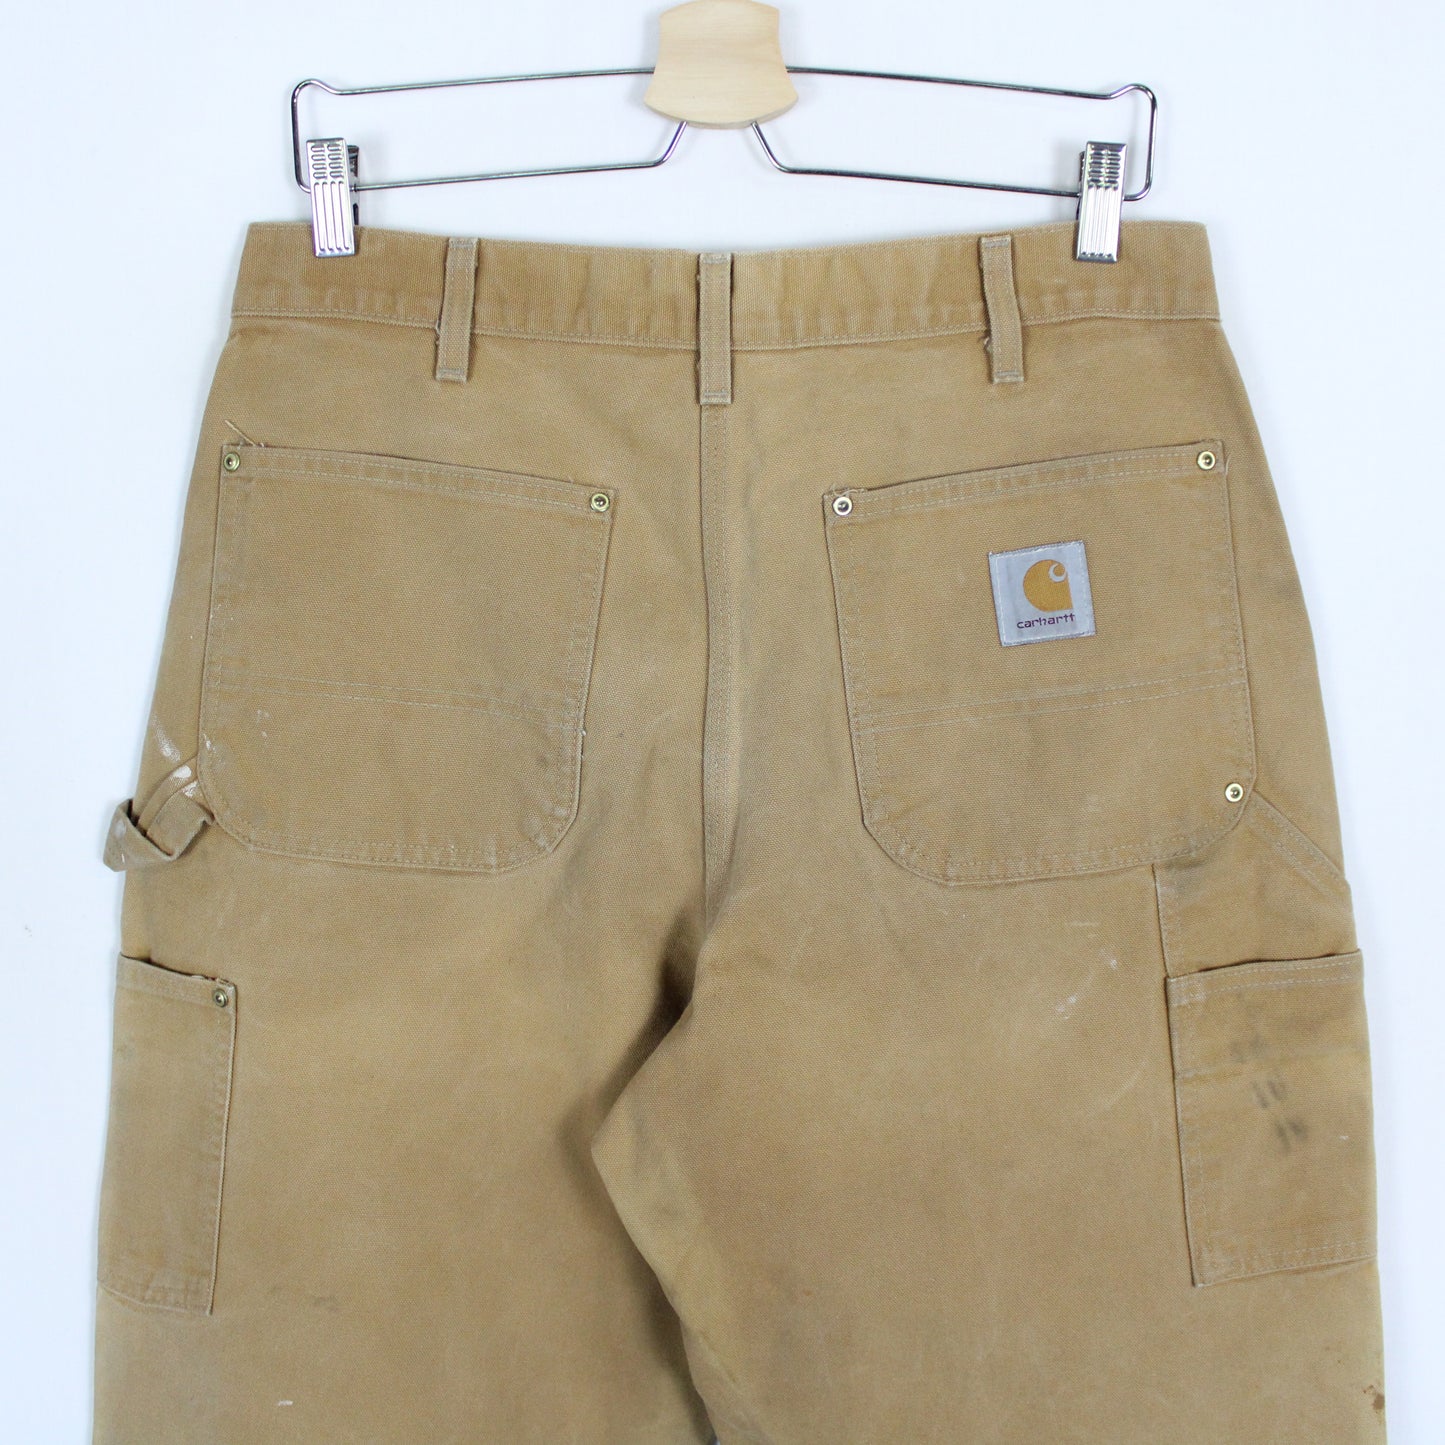 Vintage Carhartt Double Knee Carpenter Pants - 33x36